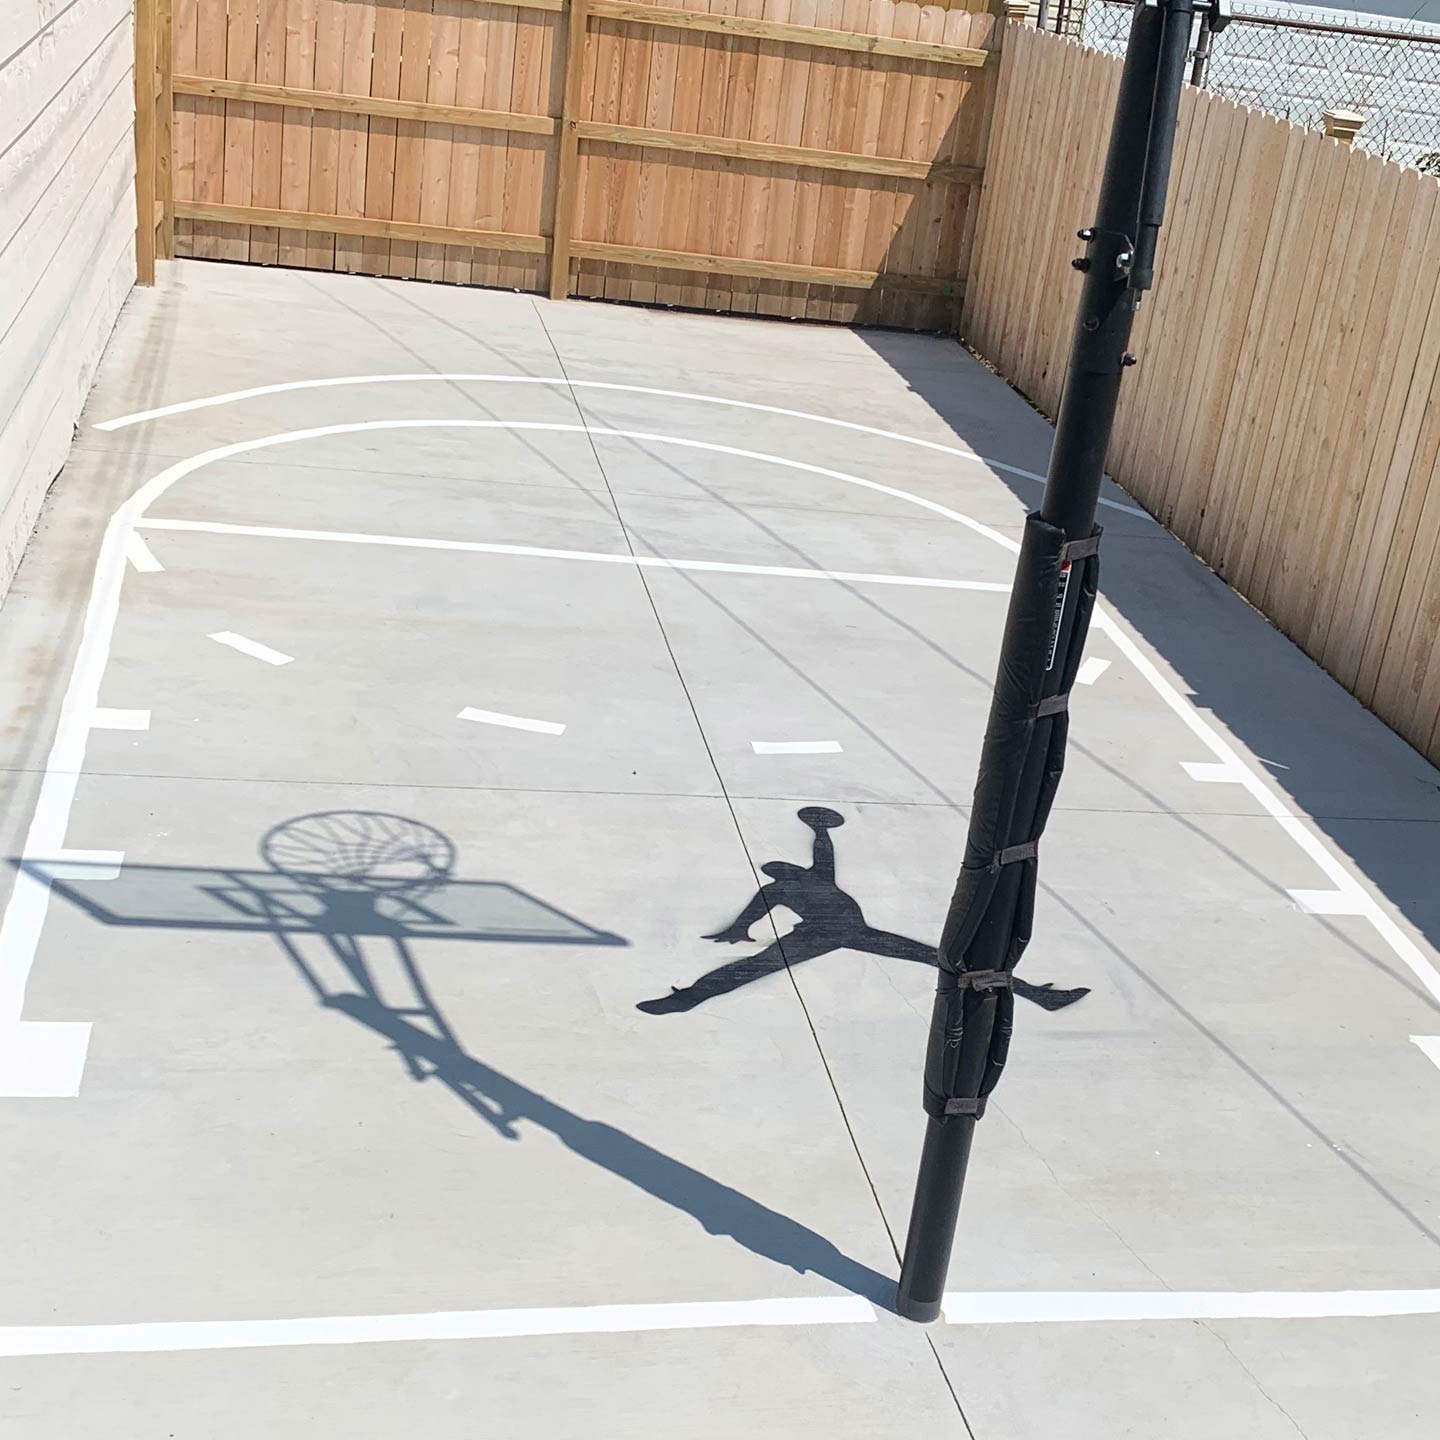 Jordan Jumpman Stencil on Basketball Court